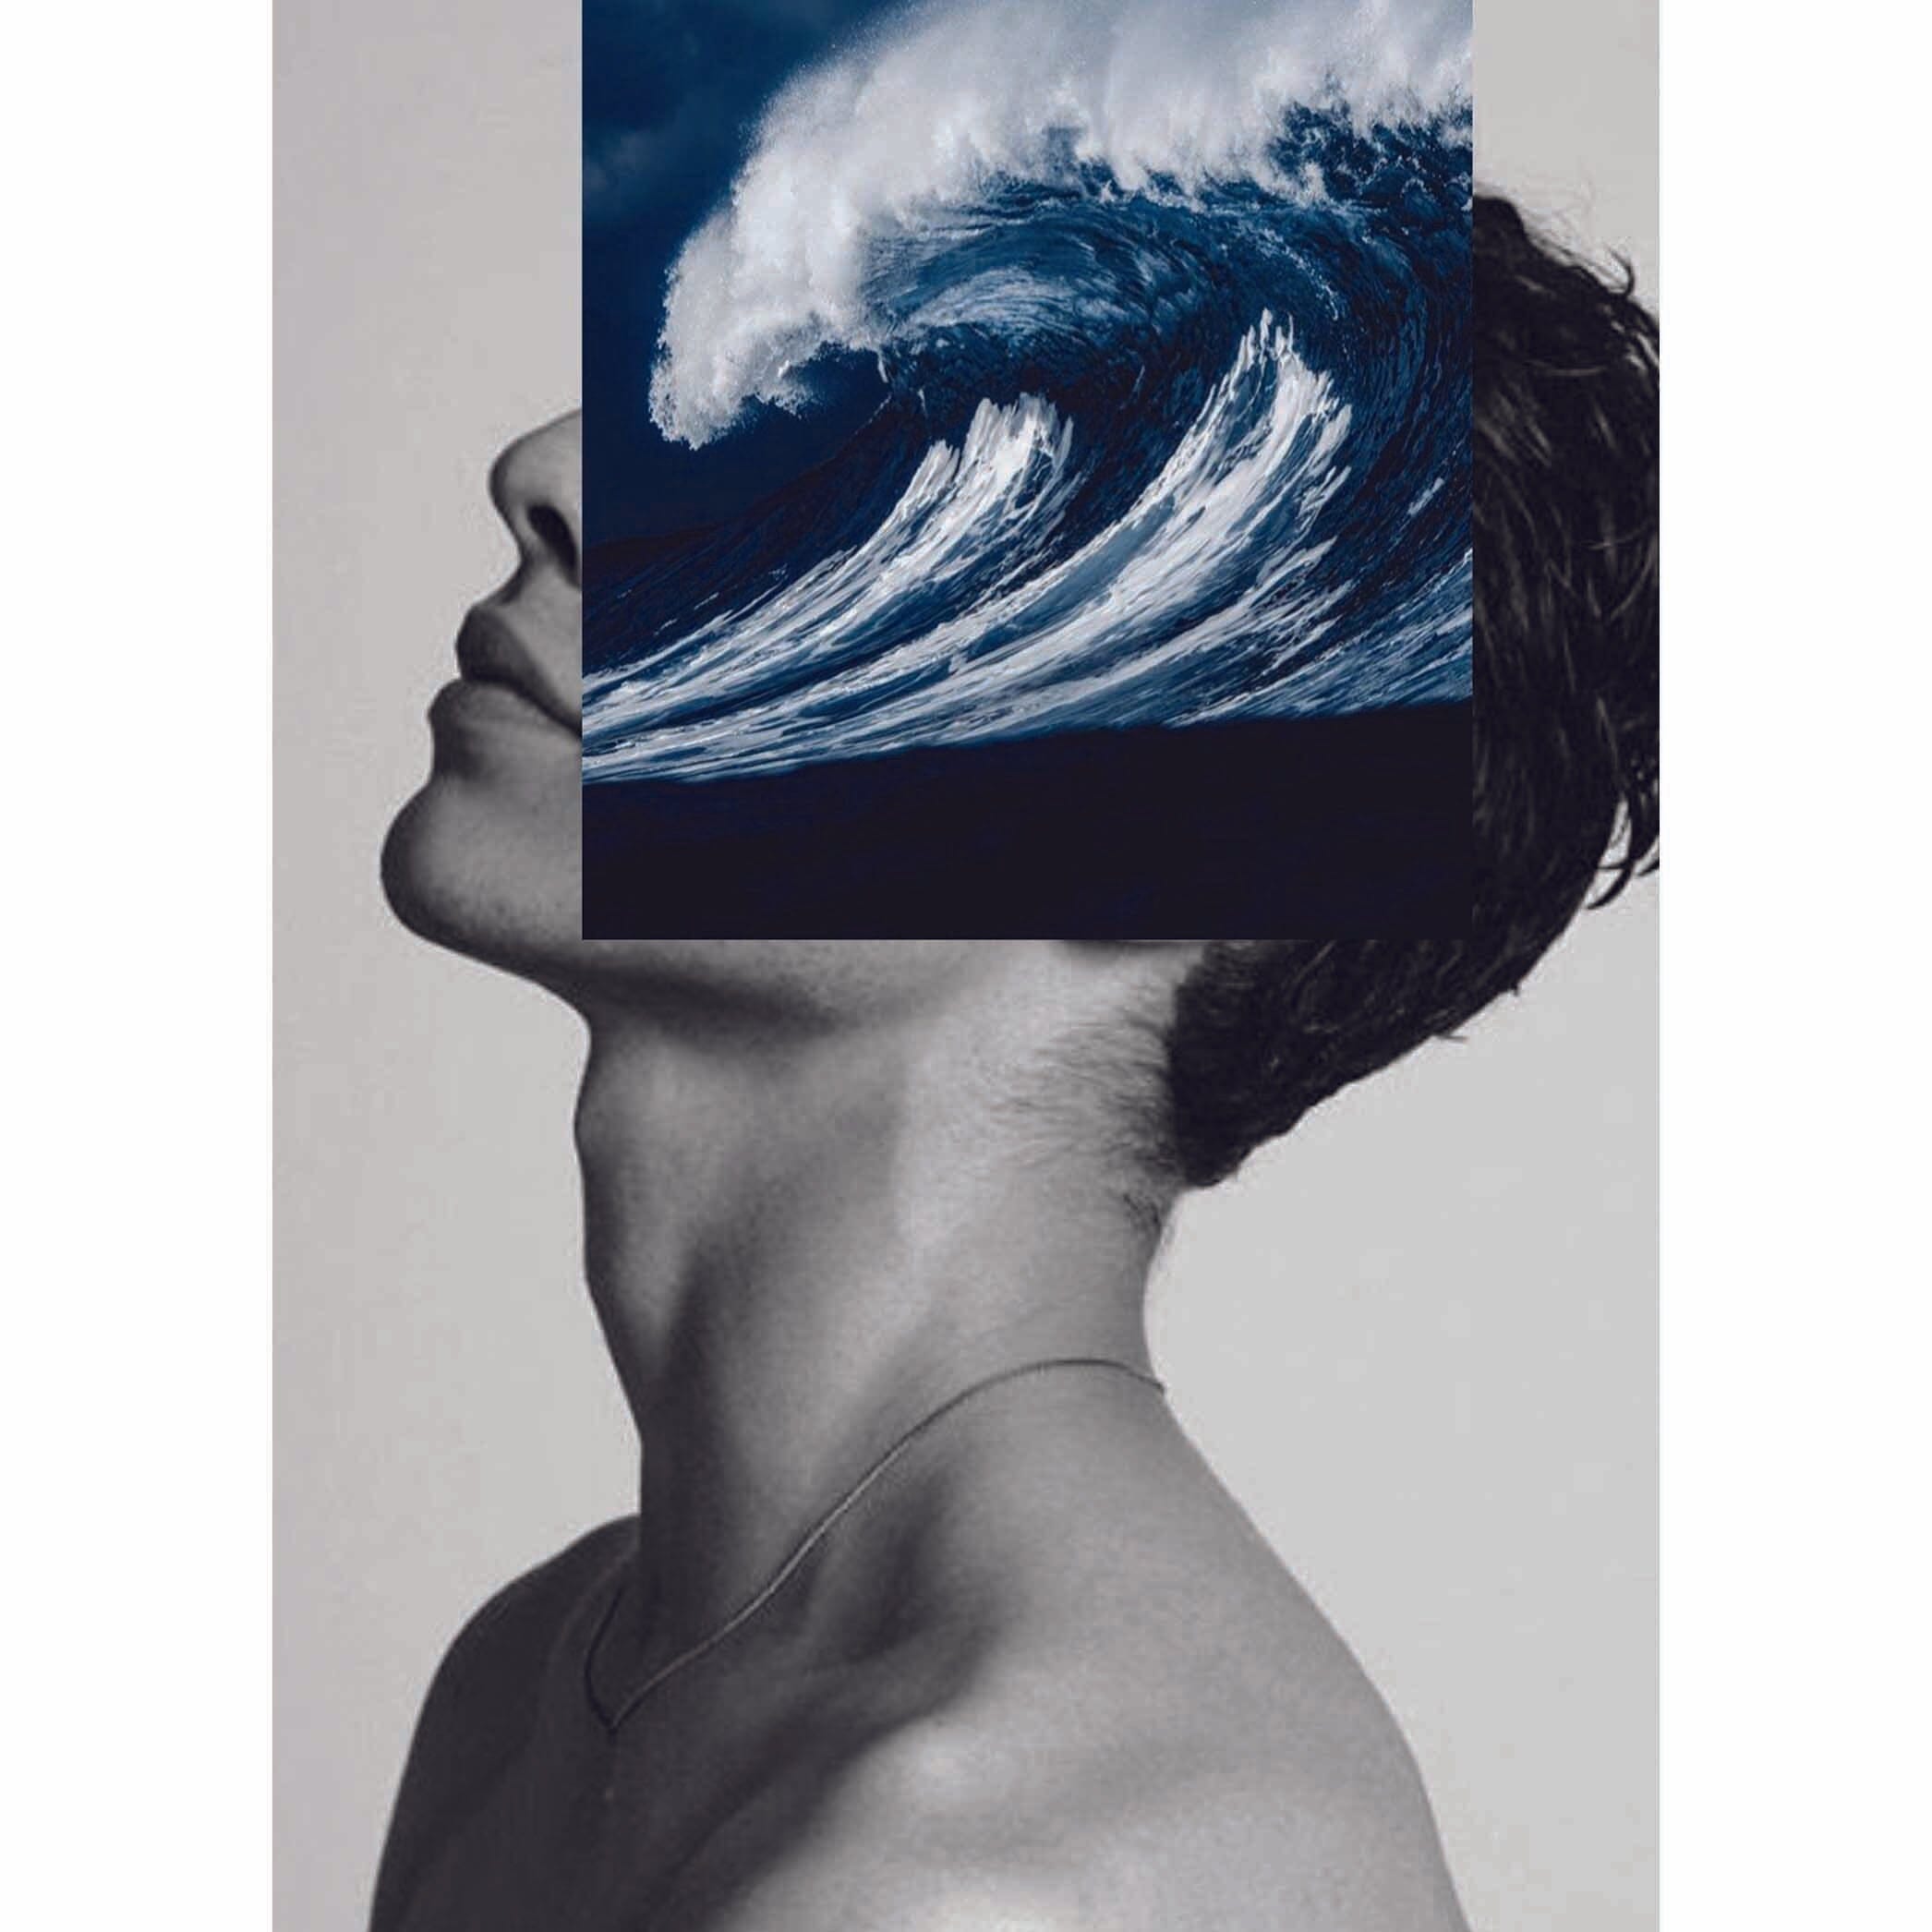 Naro pinosa wave face collage postcard